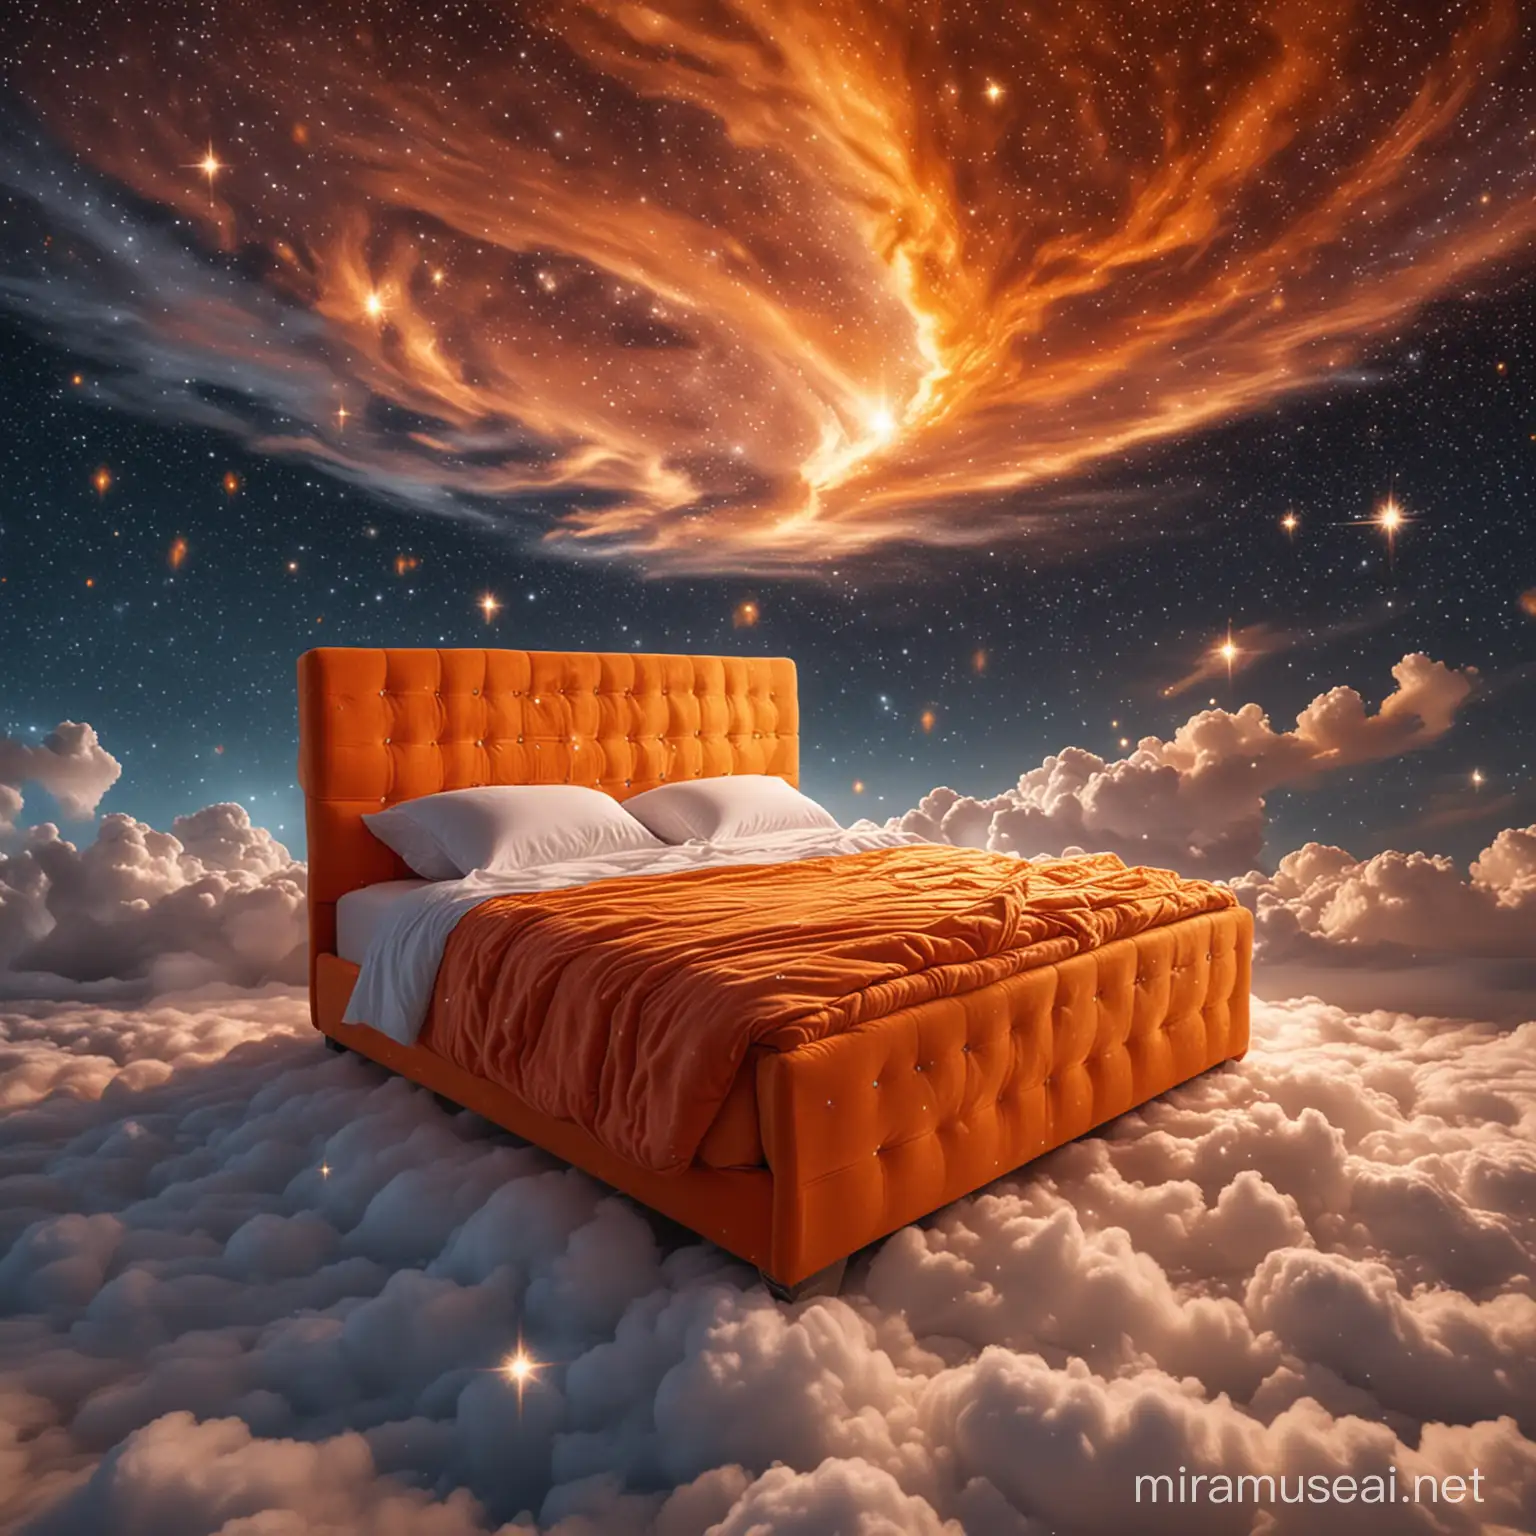 DiamondStudded Orange Bed Among Stars and Clouds